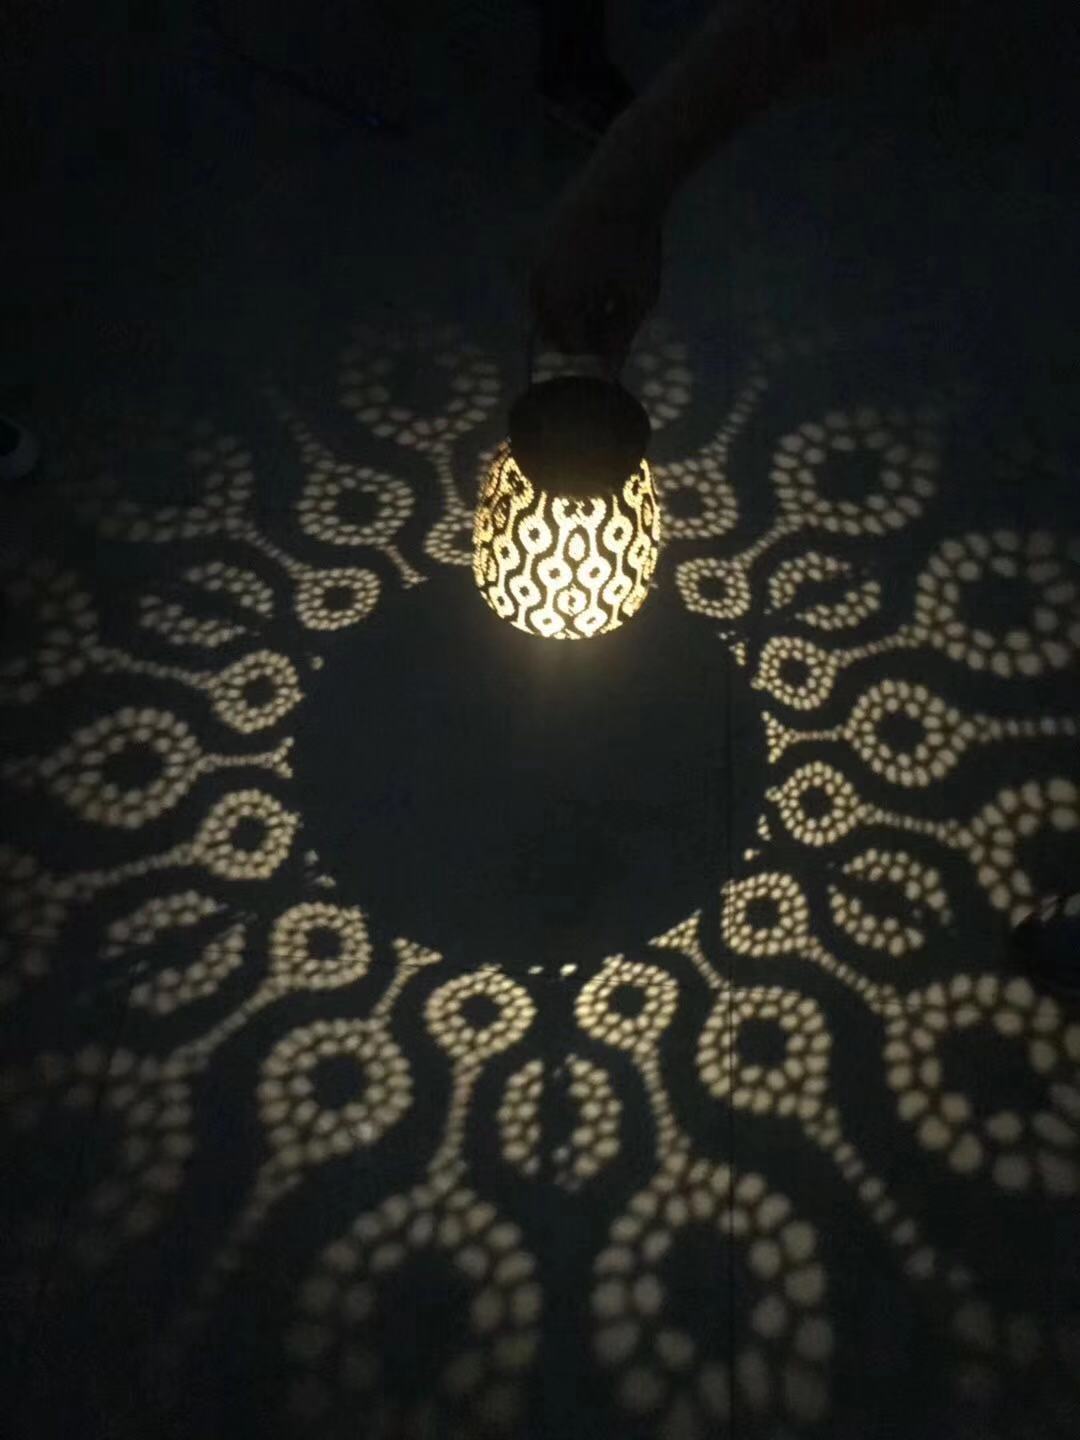 Decorative Patio Solar Shadow Candle Hanging Light